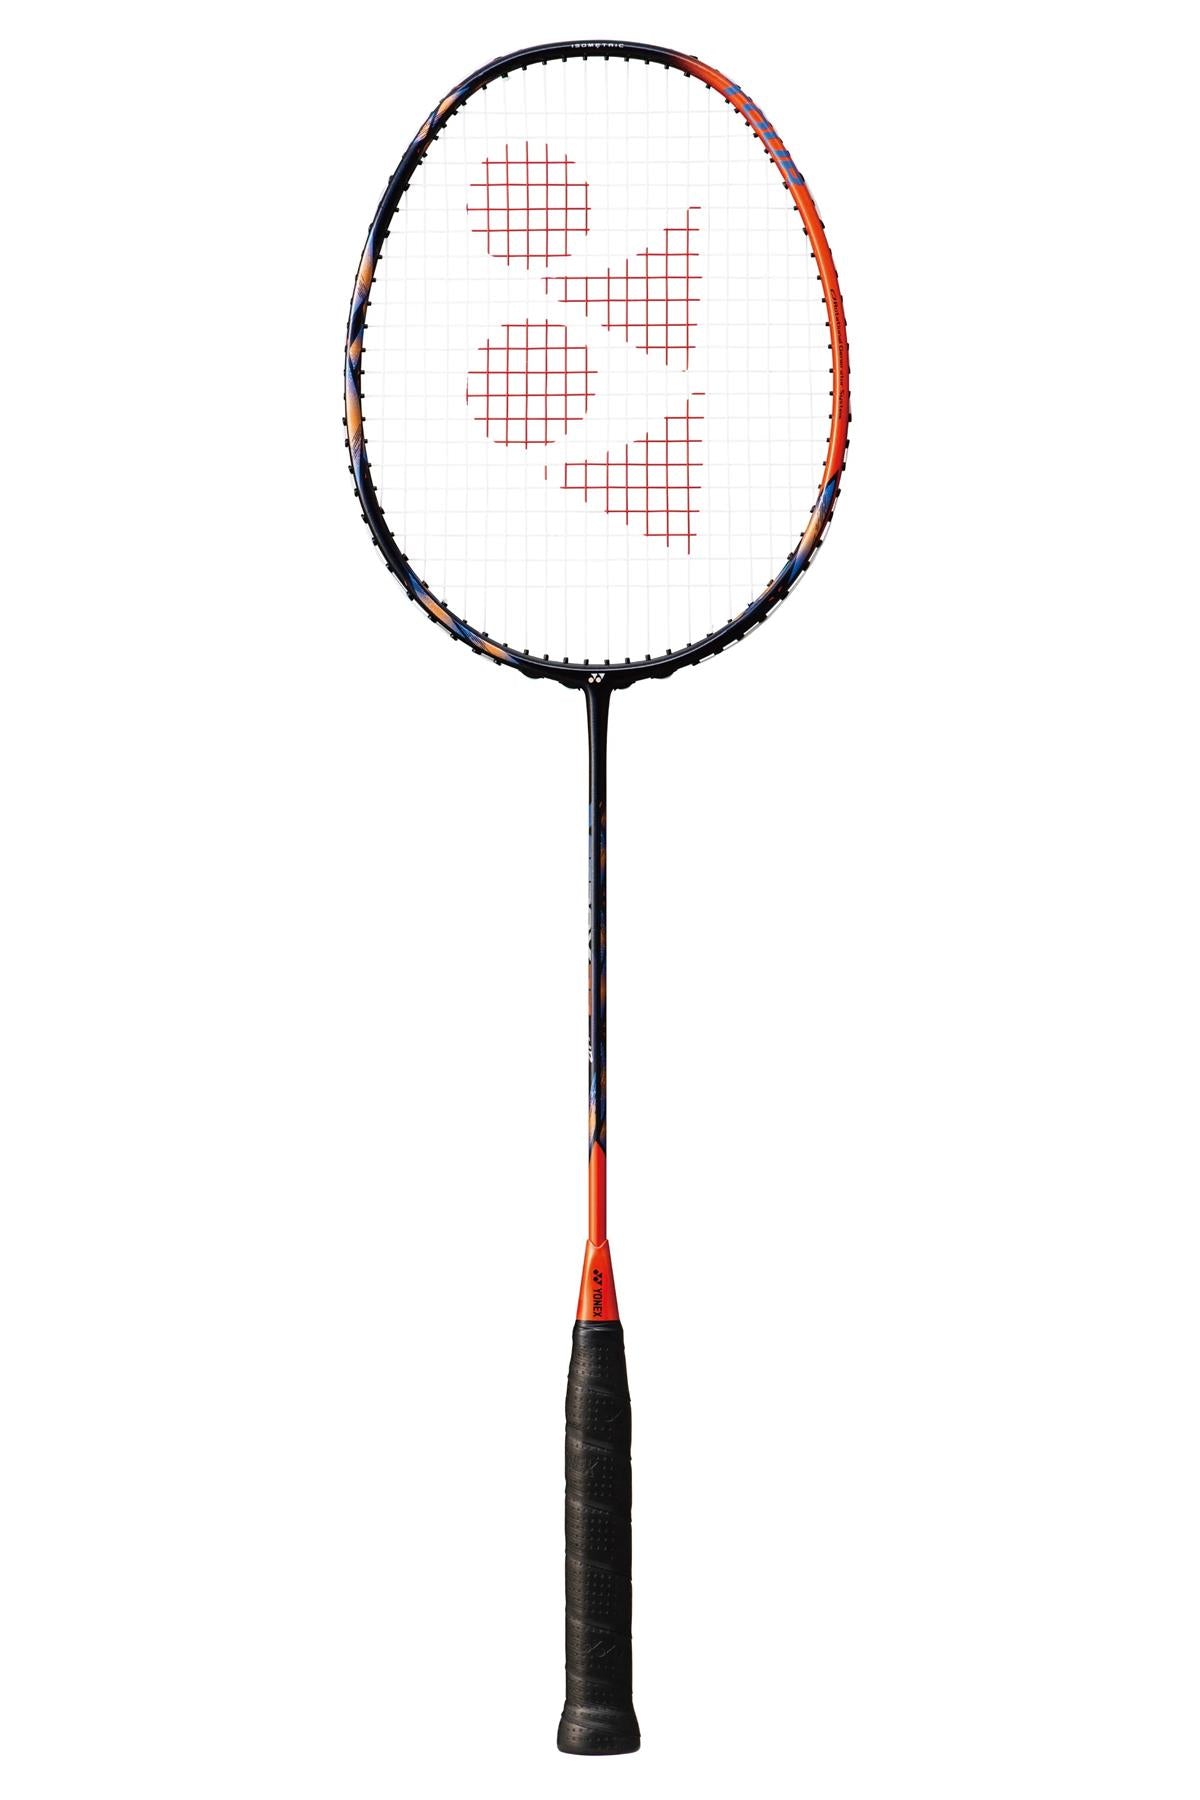 Yonex Astrox 77 Tour 4U Badminton Racket - High Orange - Single